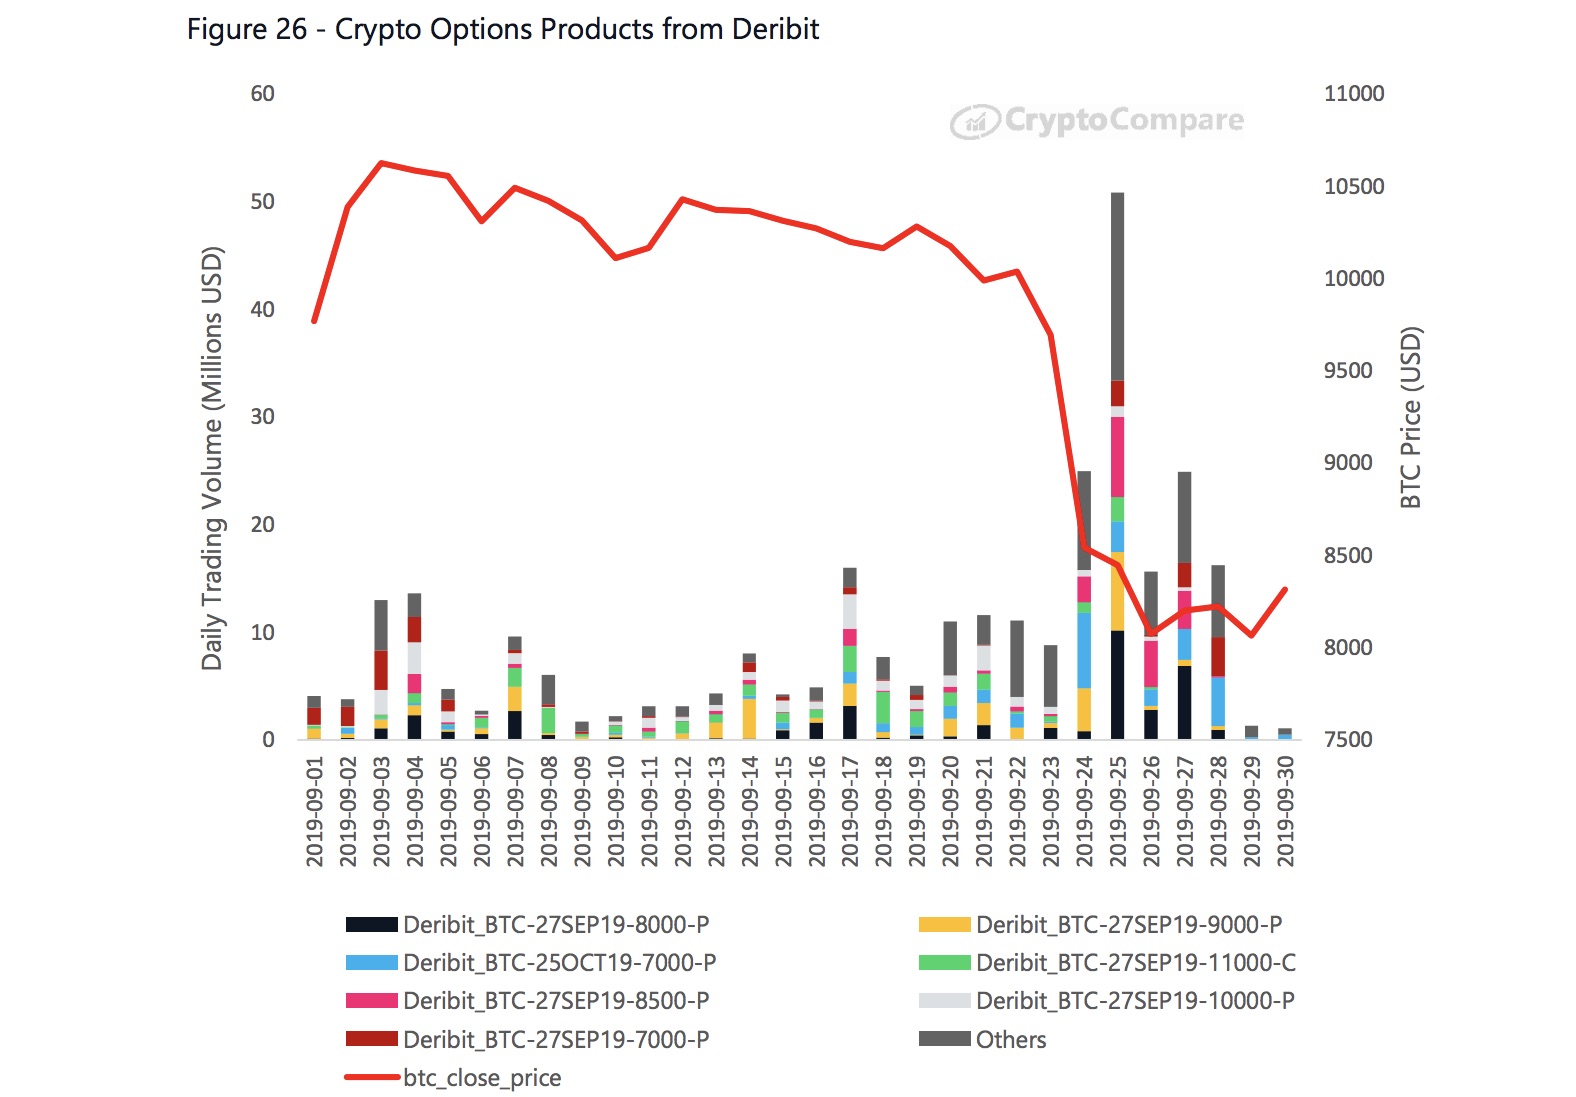 Deribit Bitcoin option volumes in September